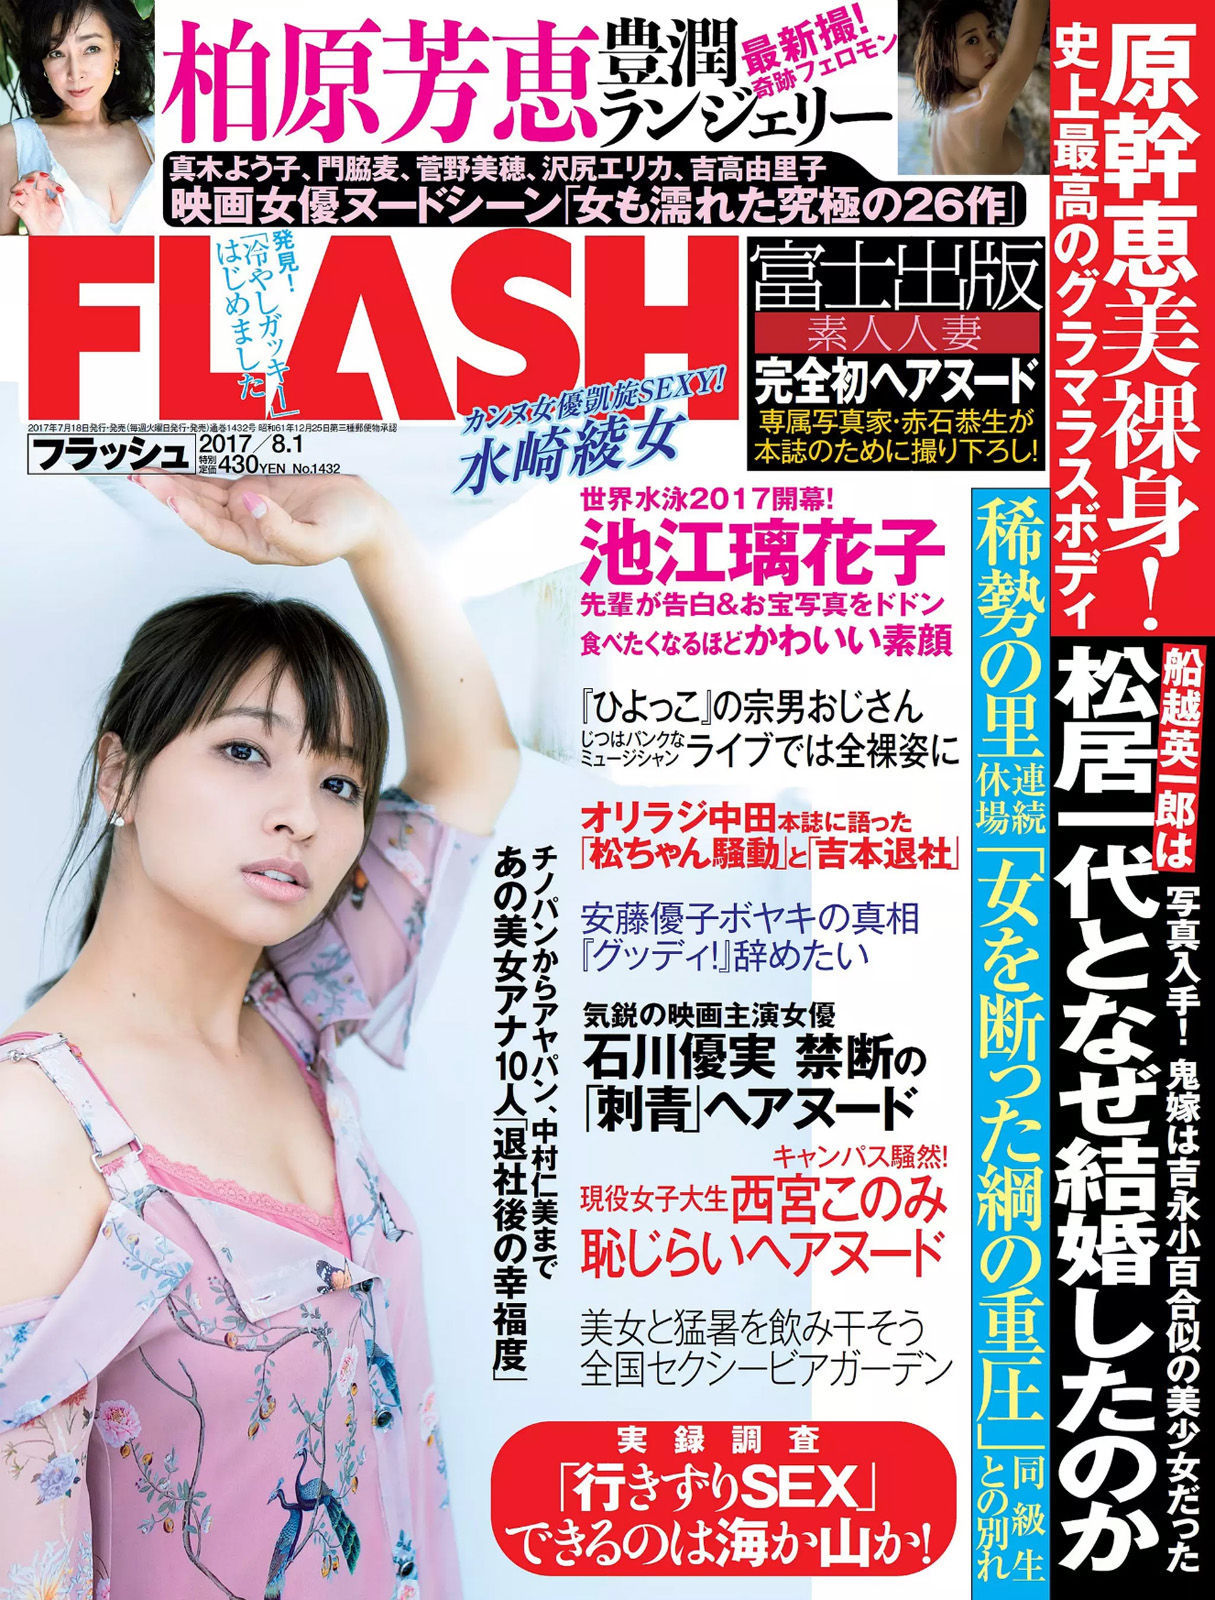 [FLASH]杂志:水崎绫女高品质壁纸图片珍藏版(12P)